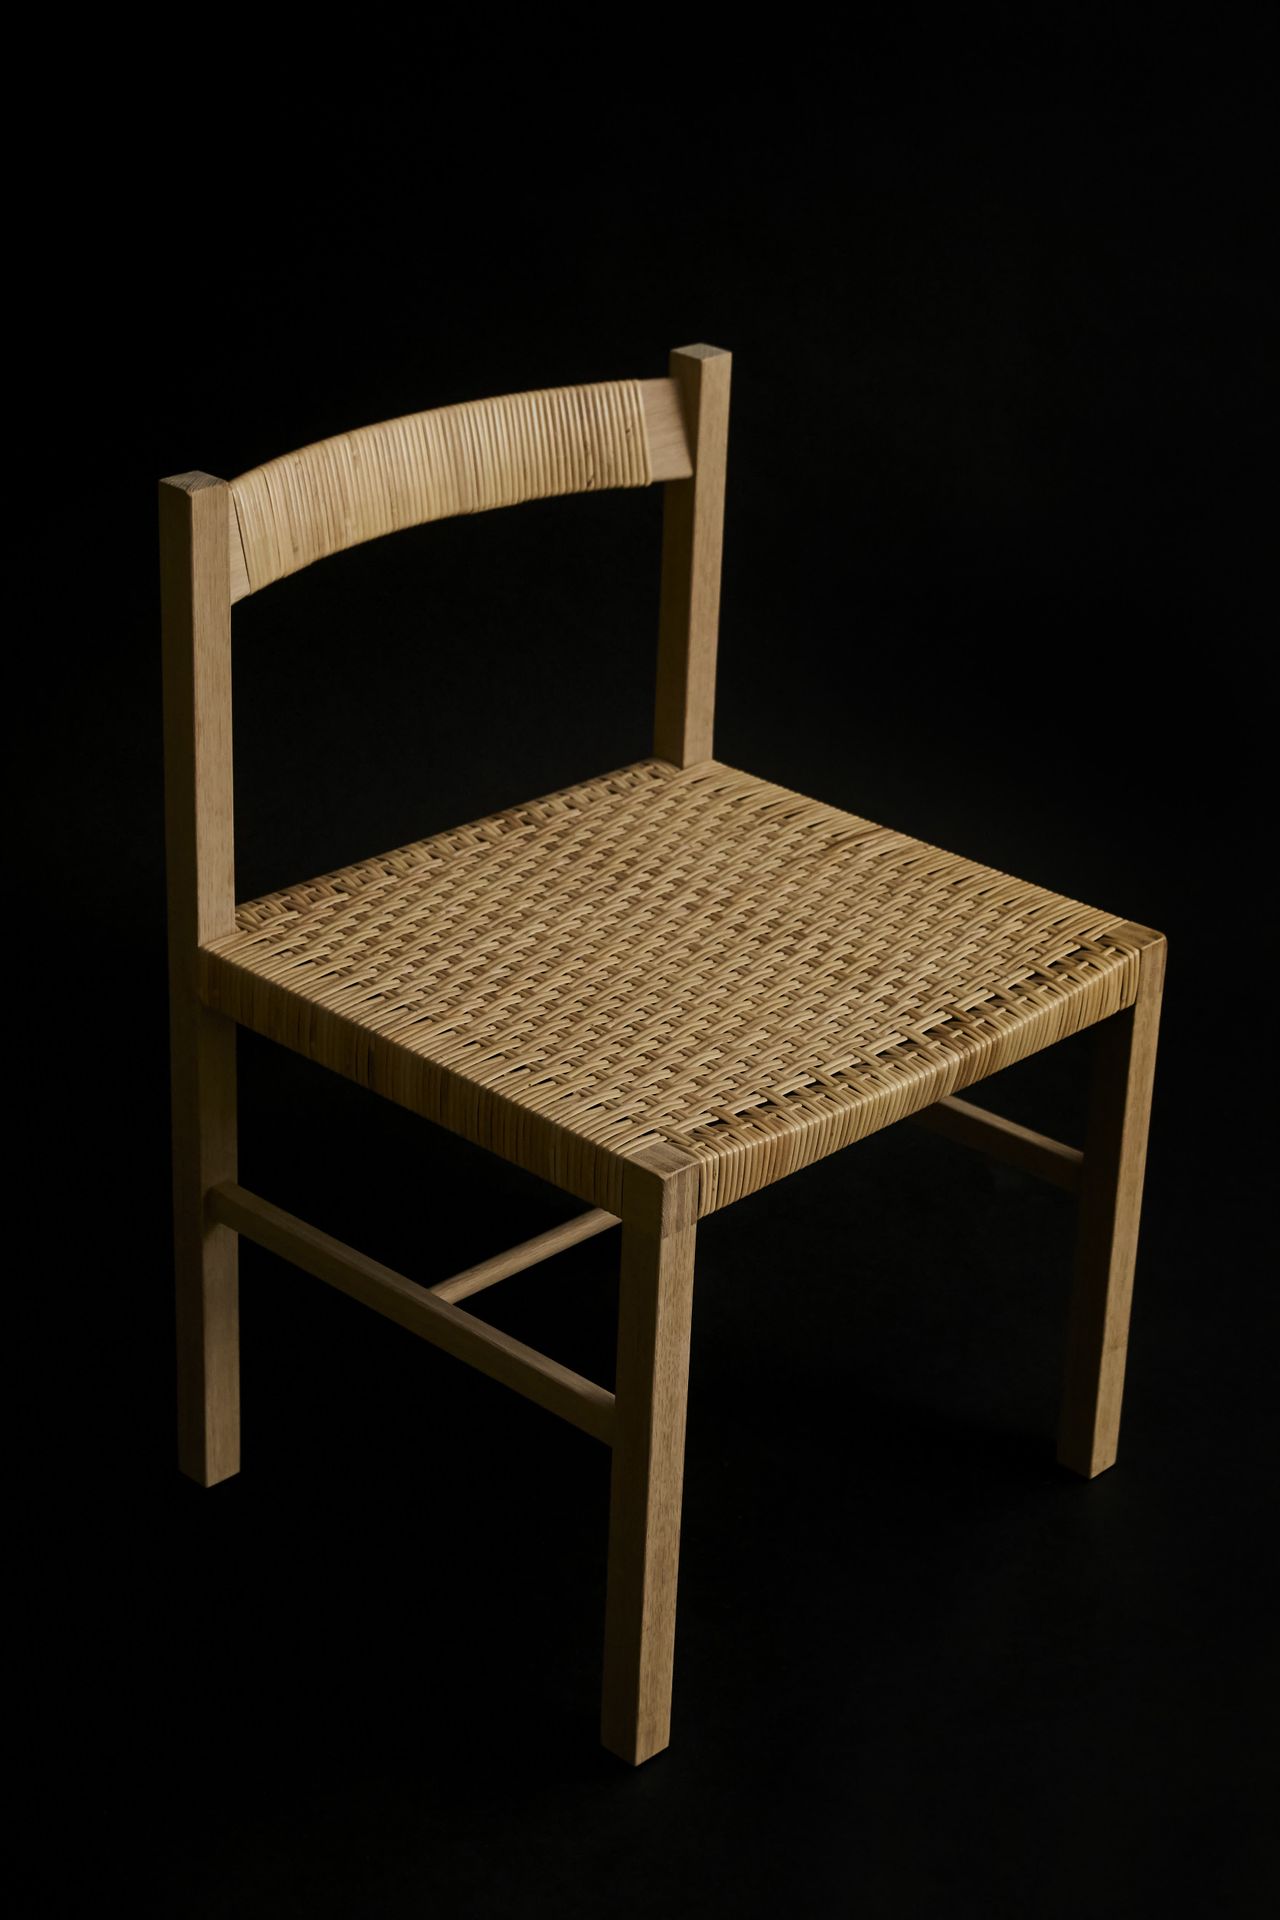 TESHIMA TAMOTSU Chair Model T.C-01
Natural oak and wicker
2018
H 68 W 46 D 42 cm